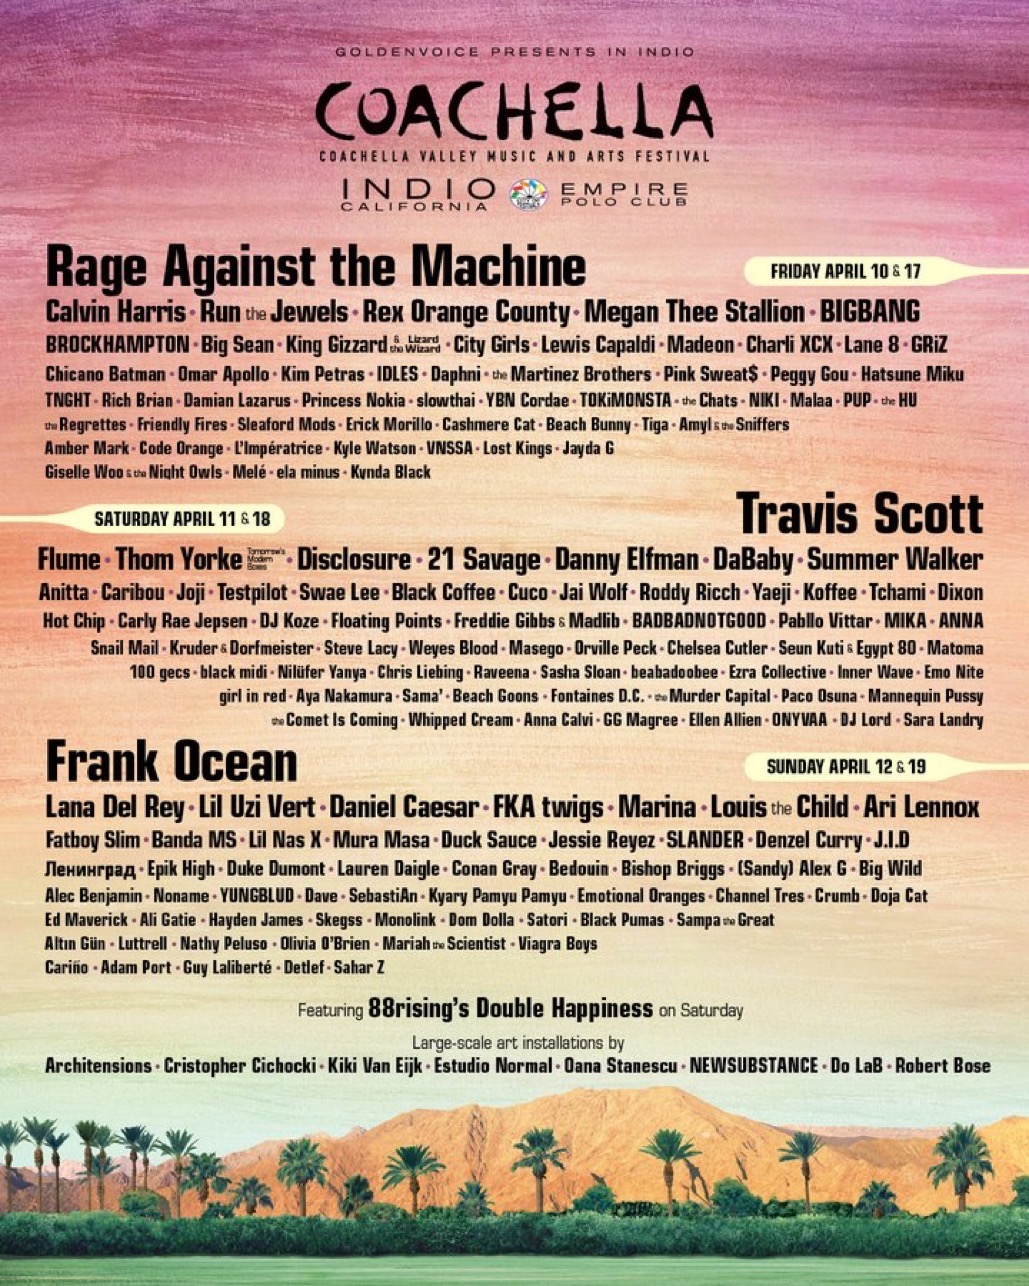 Coachella 2020 Official Lineup Announced